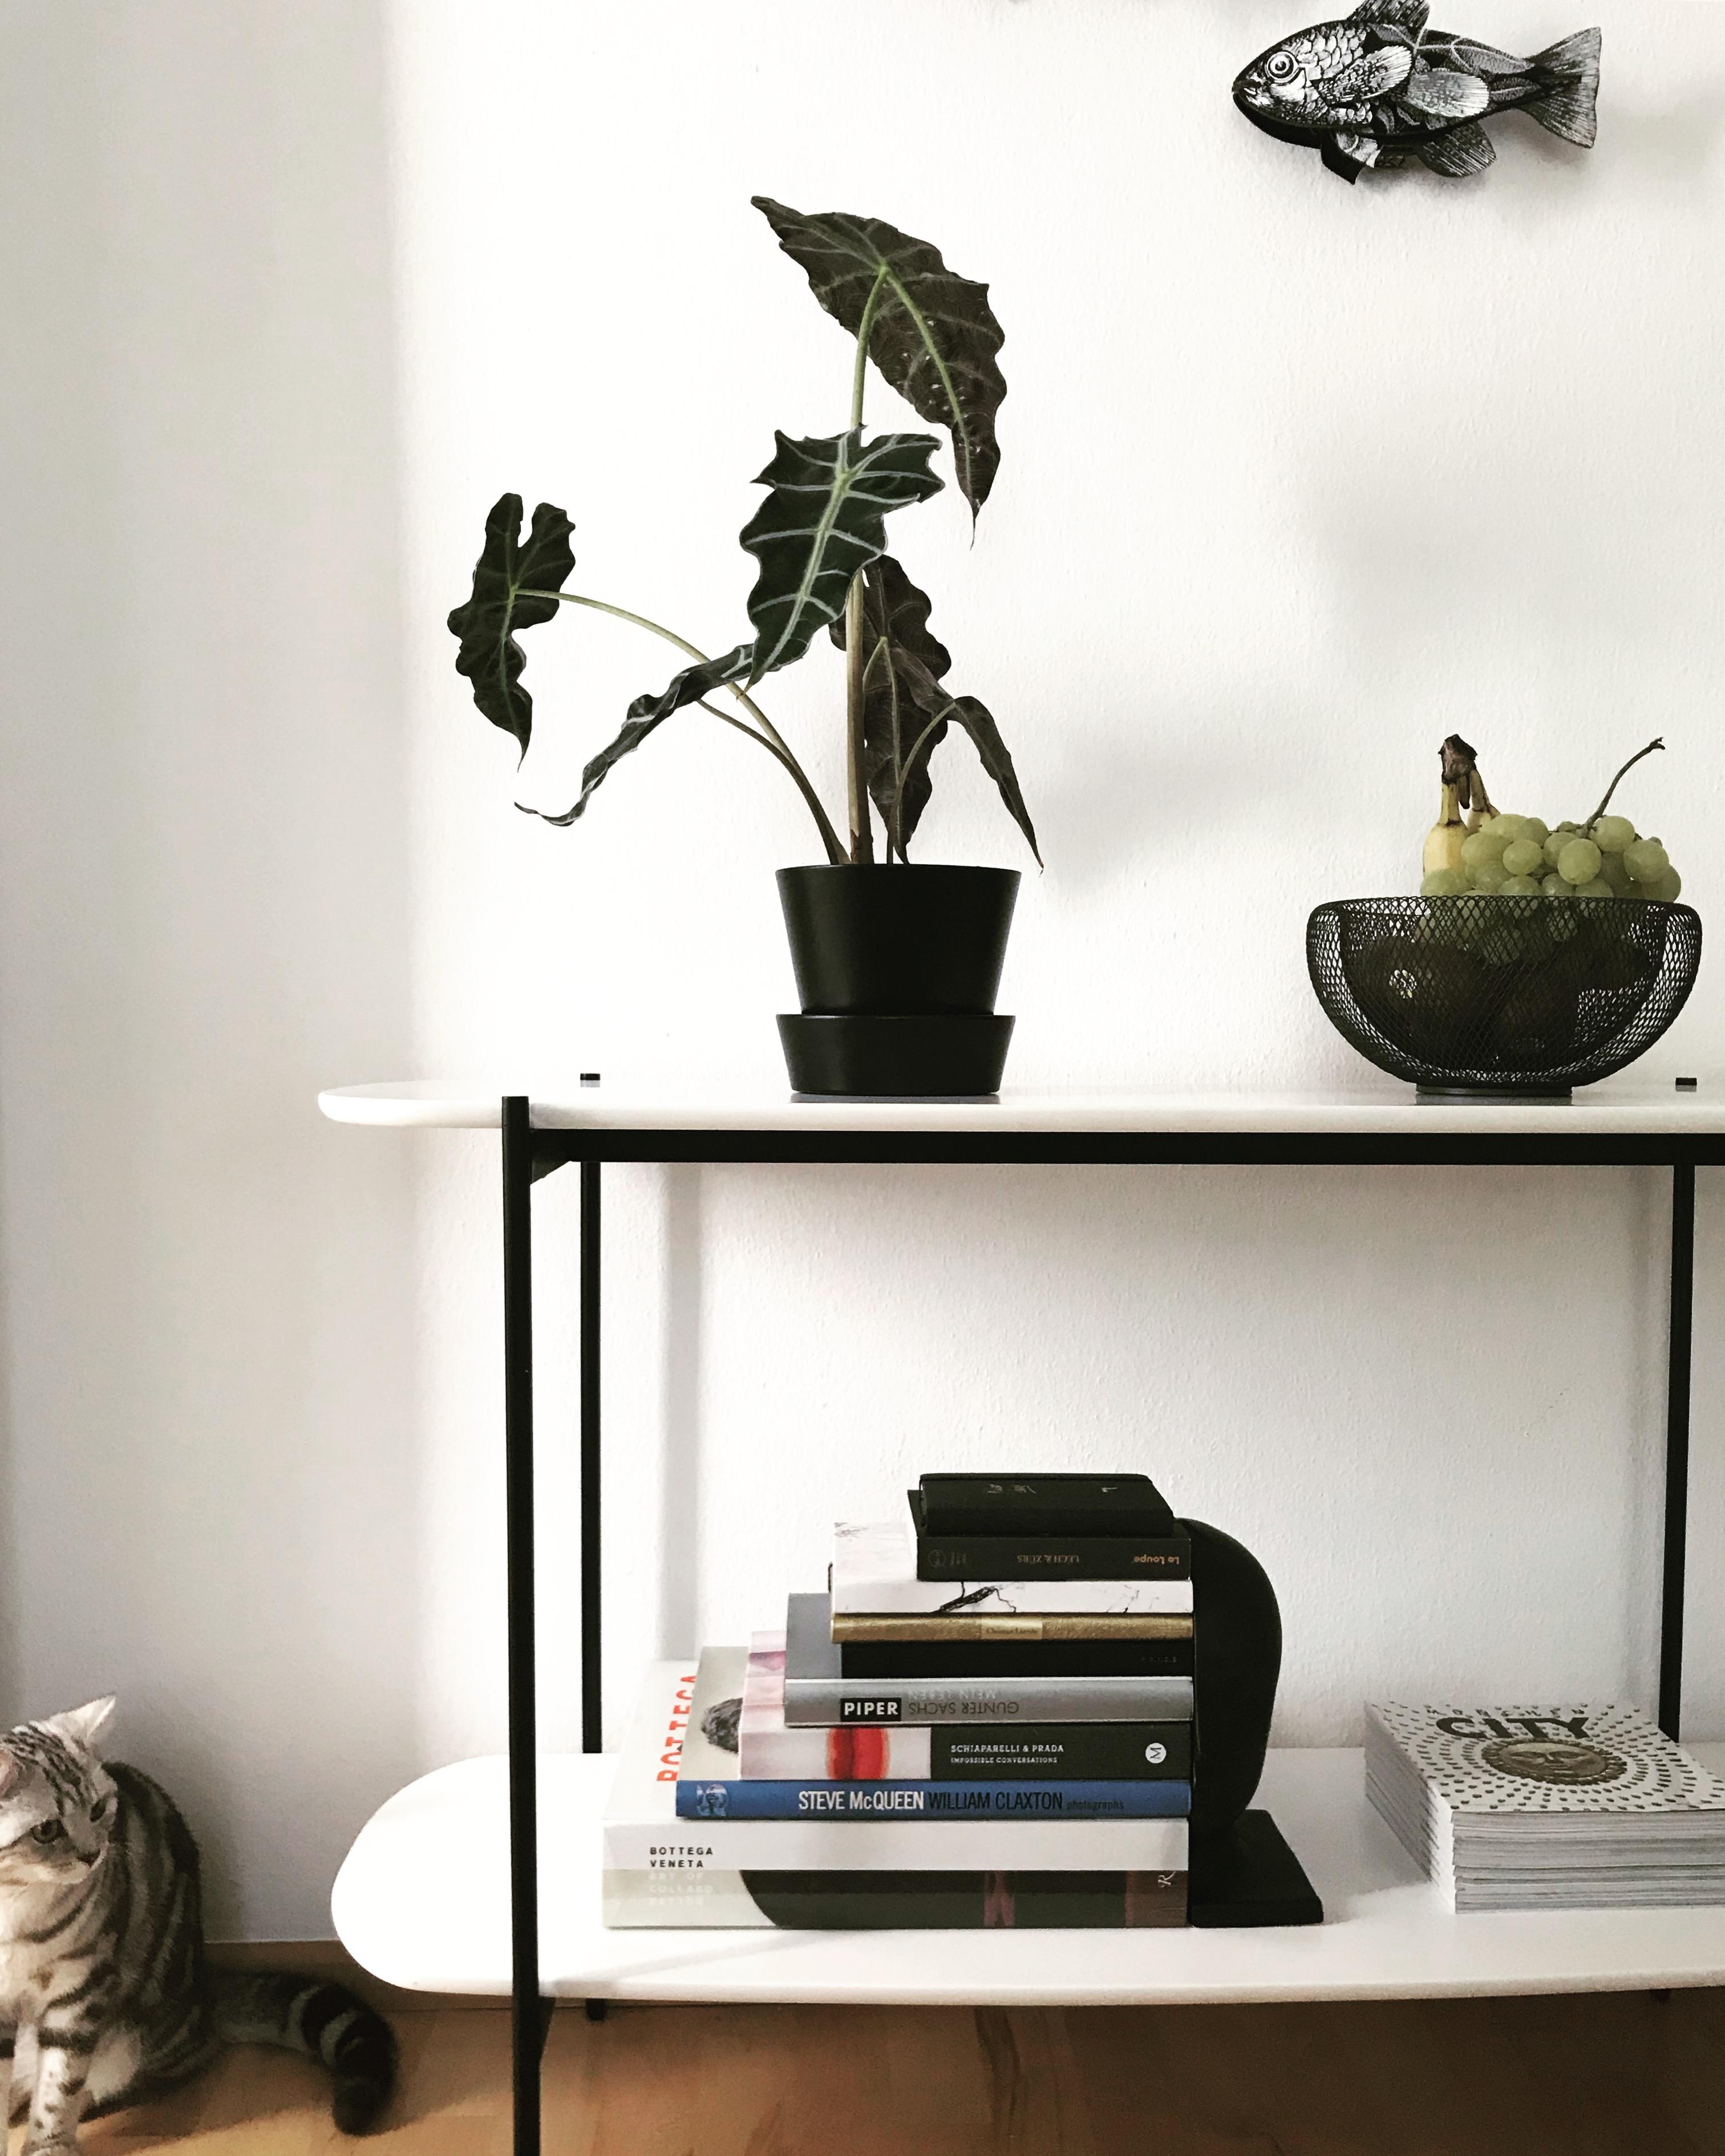 BLACK AND WHITE SHELFIE

#shelf #blackandwhite #lottithecat #livingroom #nawyshome #fashionbooks